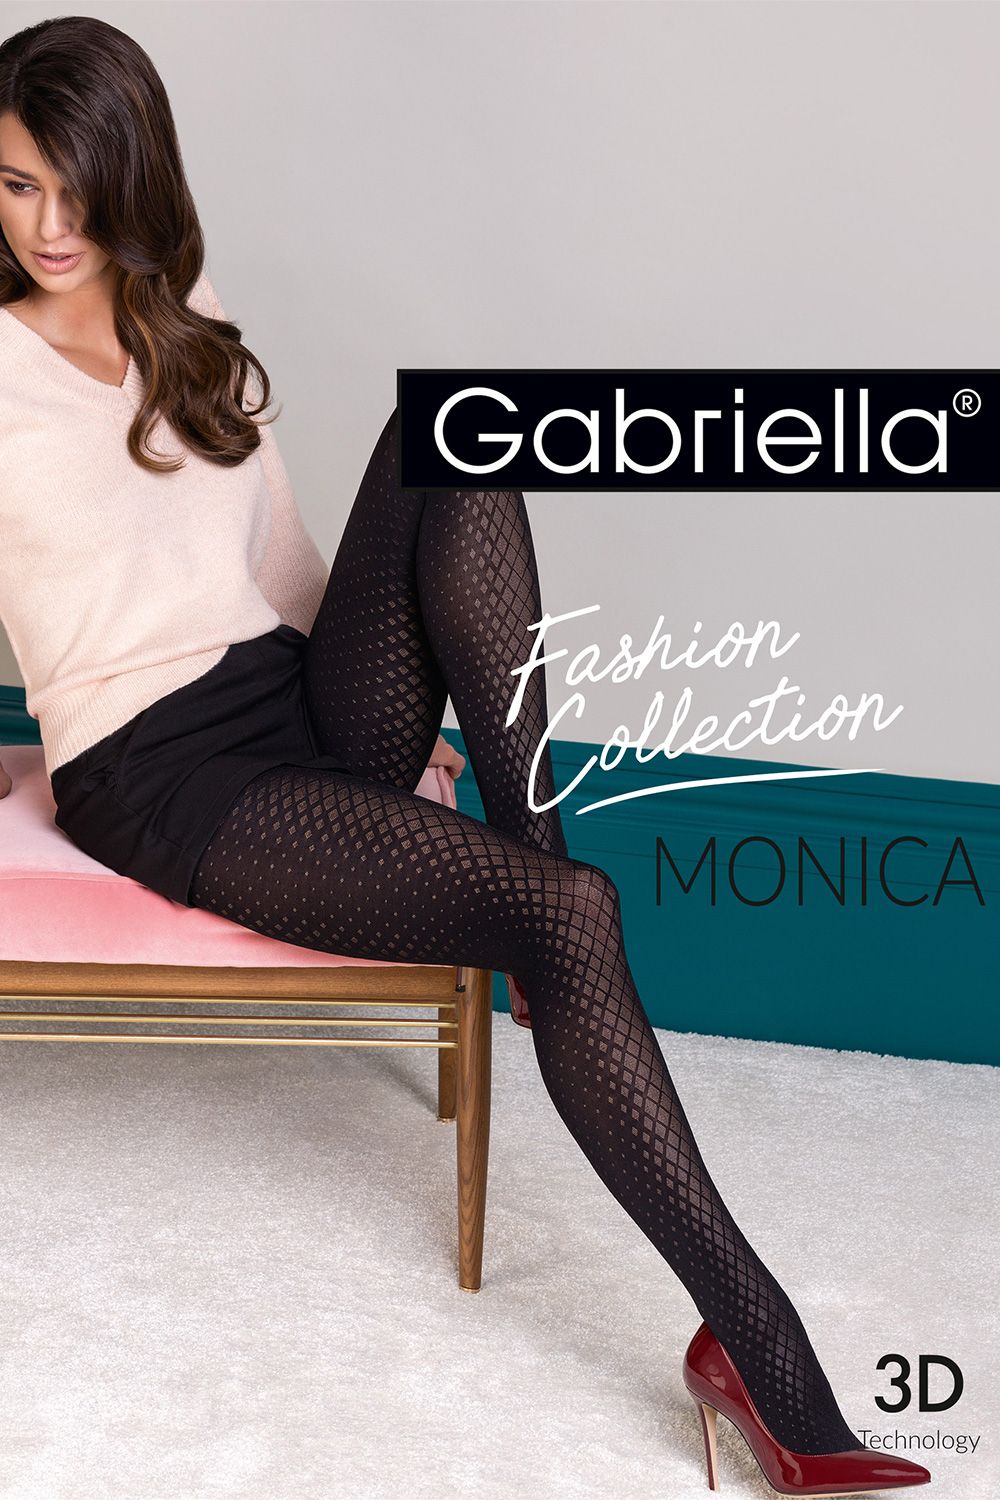 Dámské vzorované punčochové kalhoty Gabriella MONICA 3D